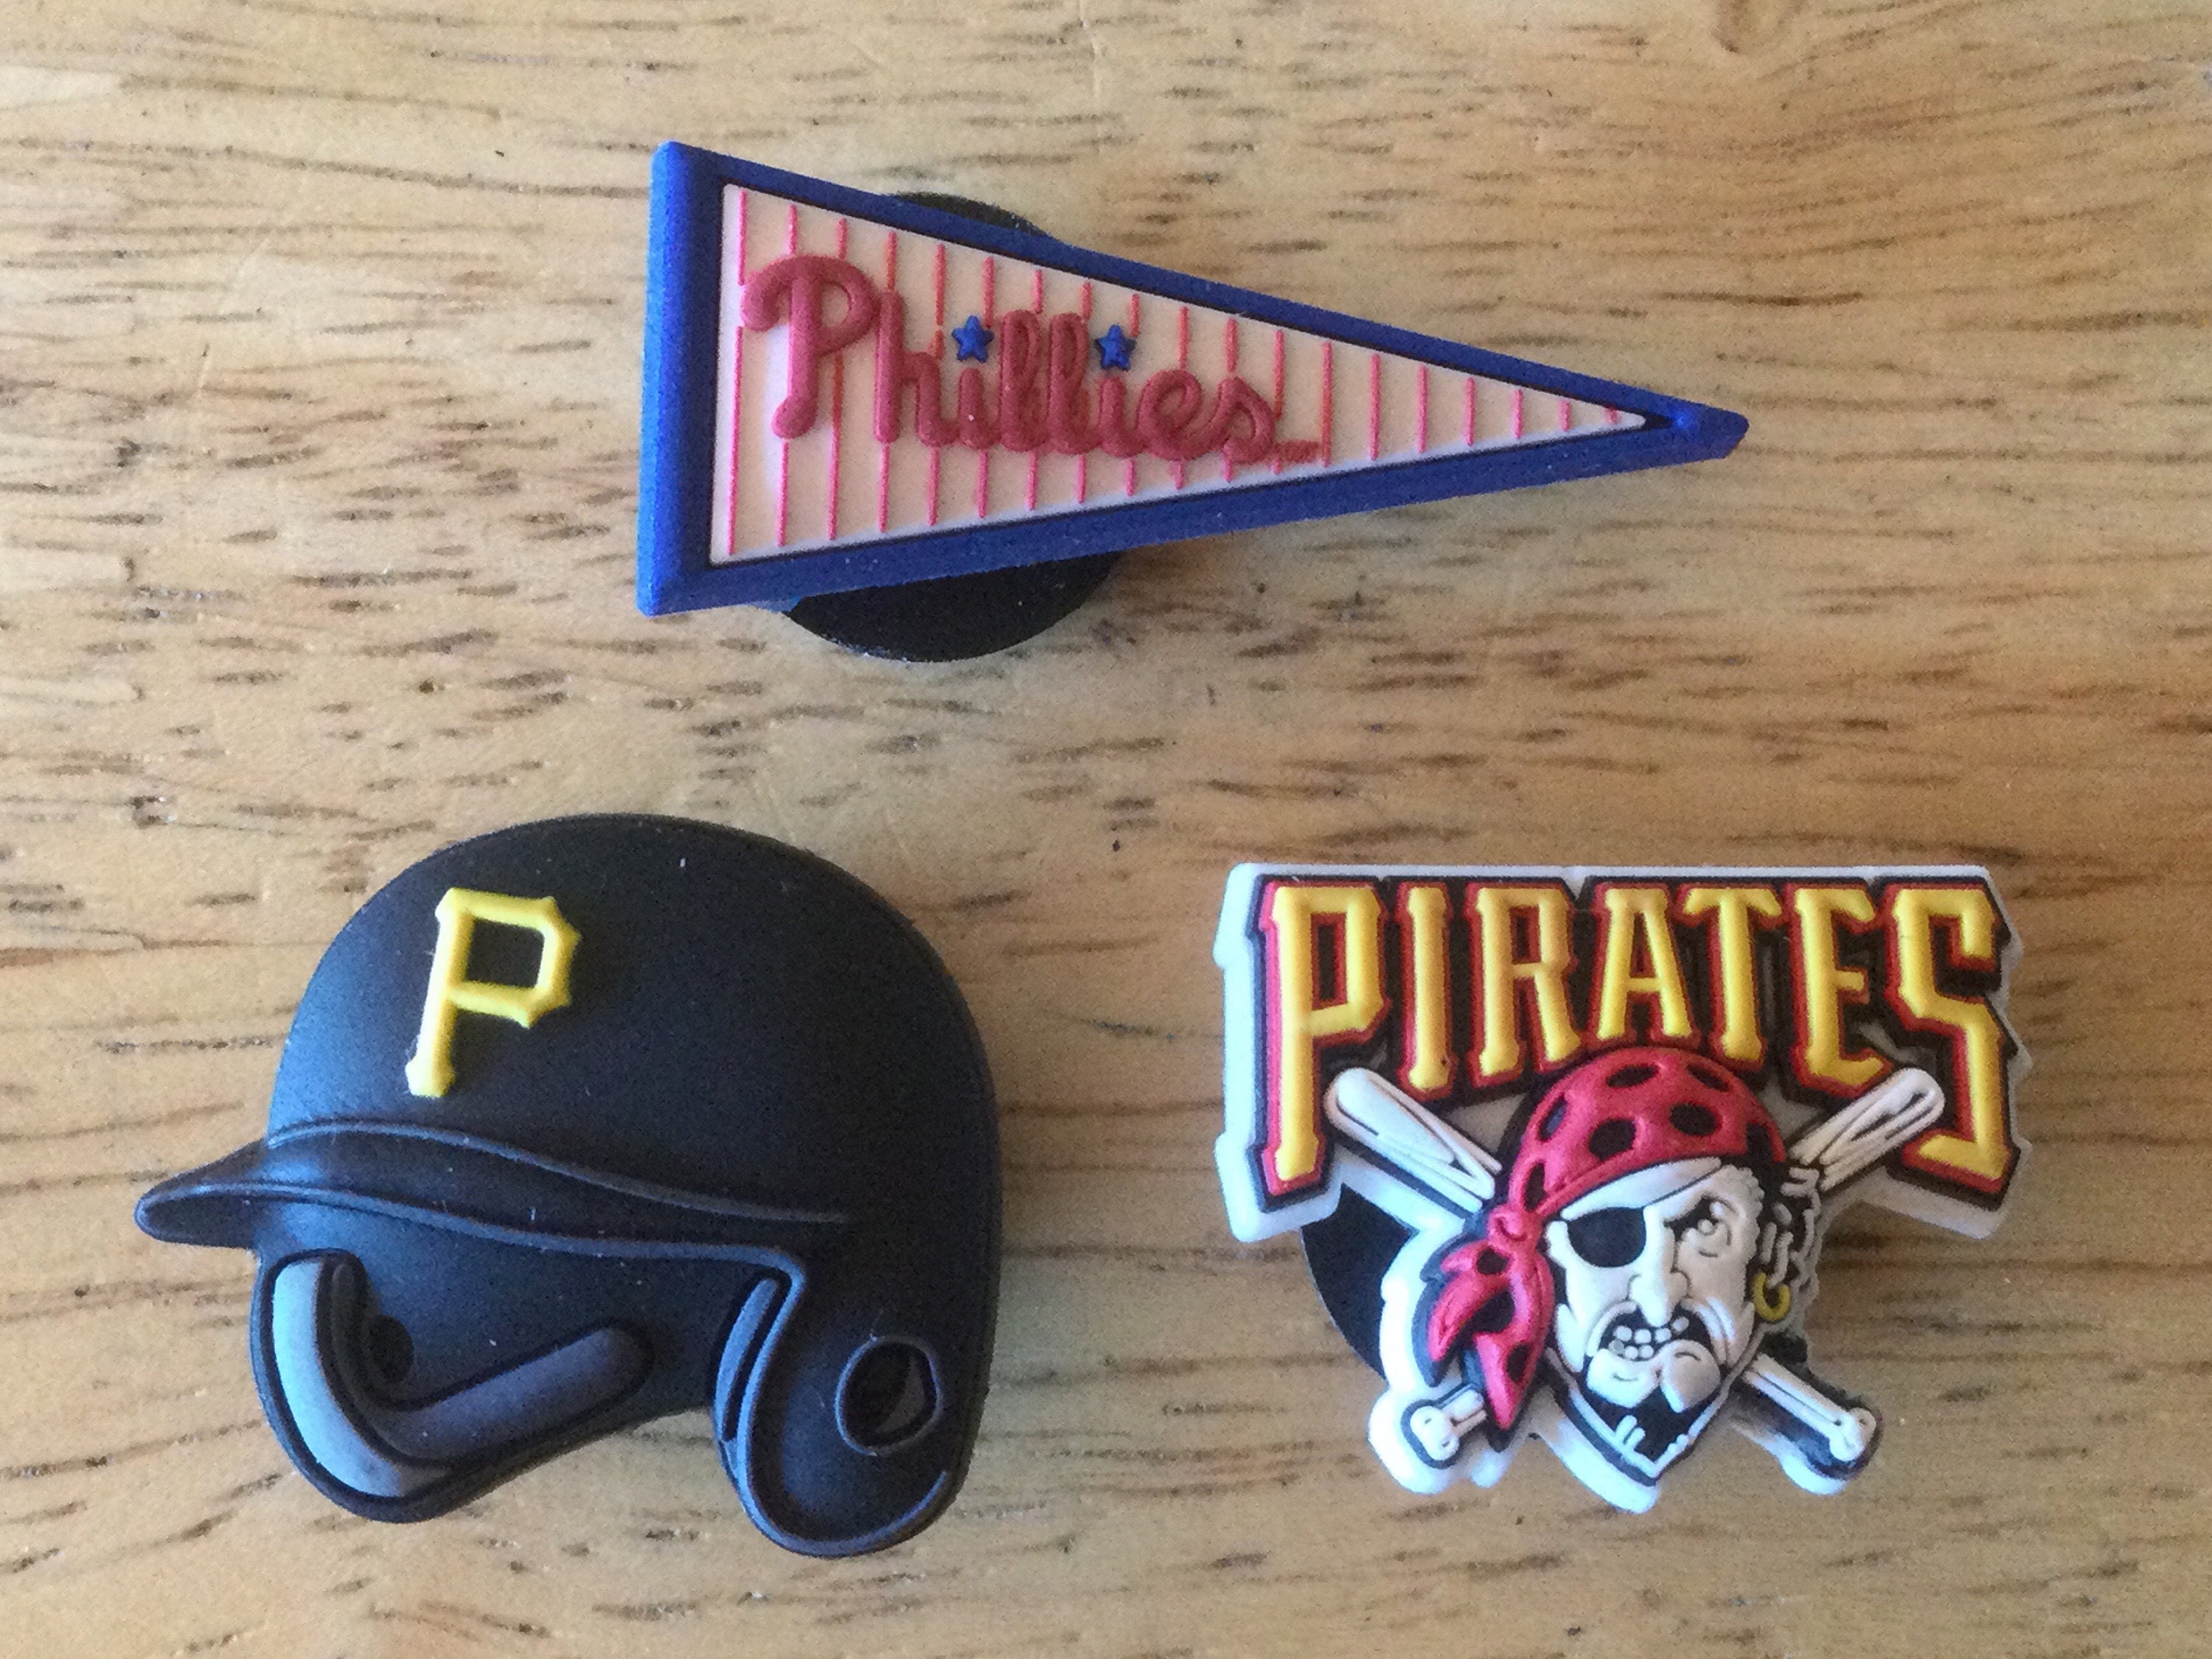 Pittsburgh Pirates Willie Stargell Majestic HOF Jersey men's size-Medium